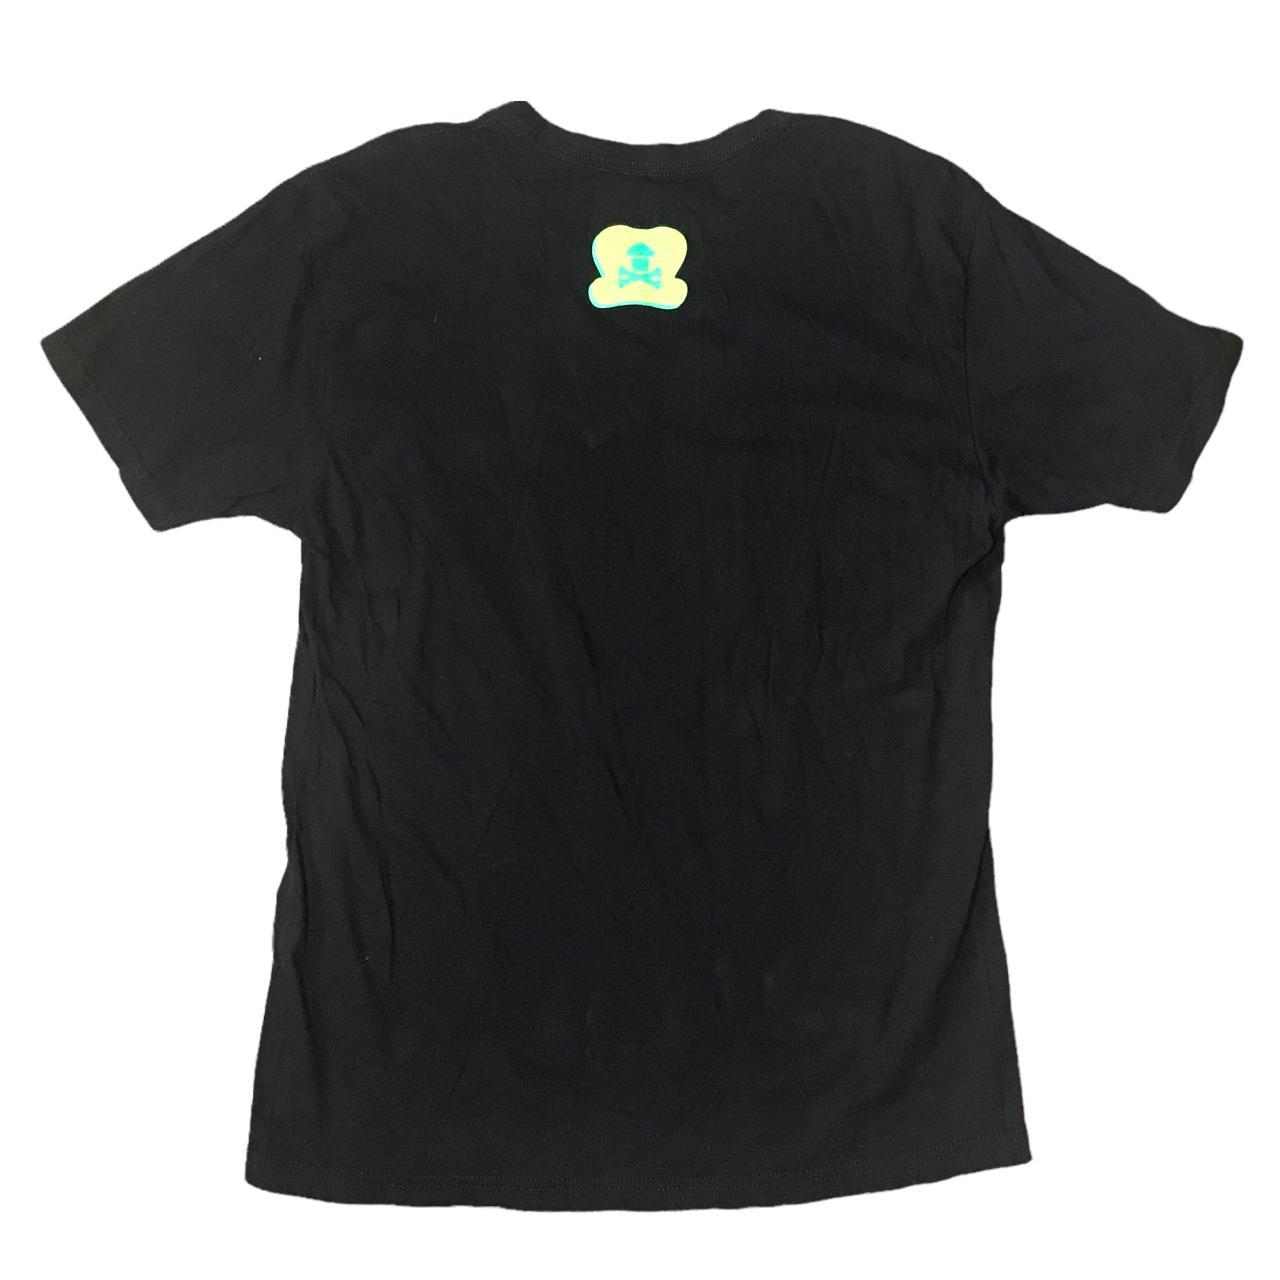 Johnny Cupcakes Men's Black T-shirt (2)